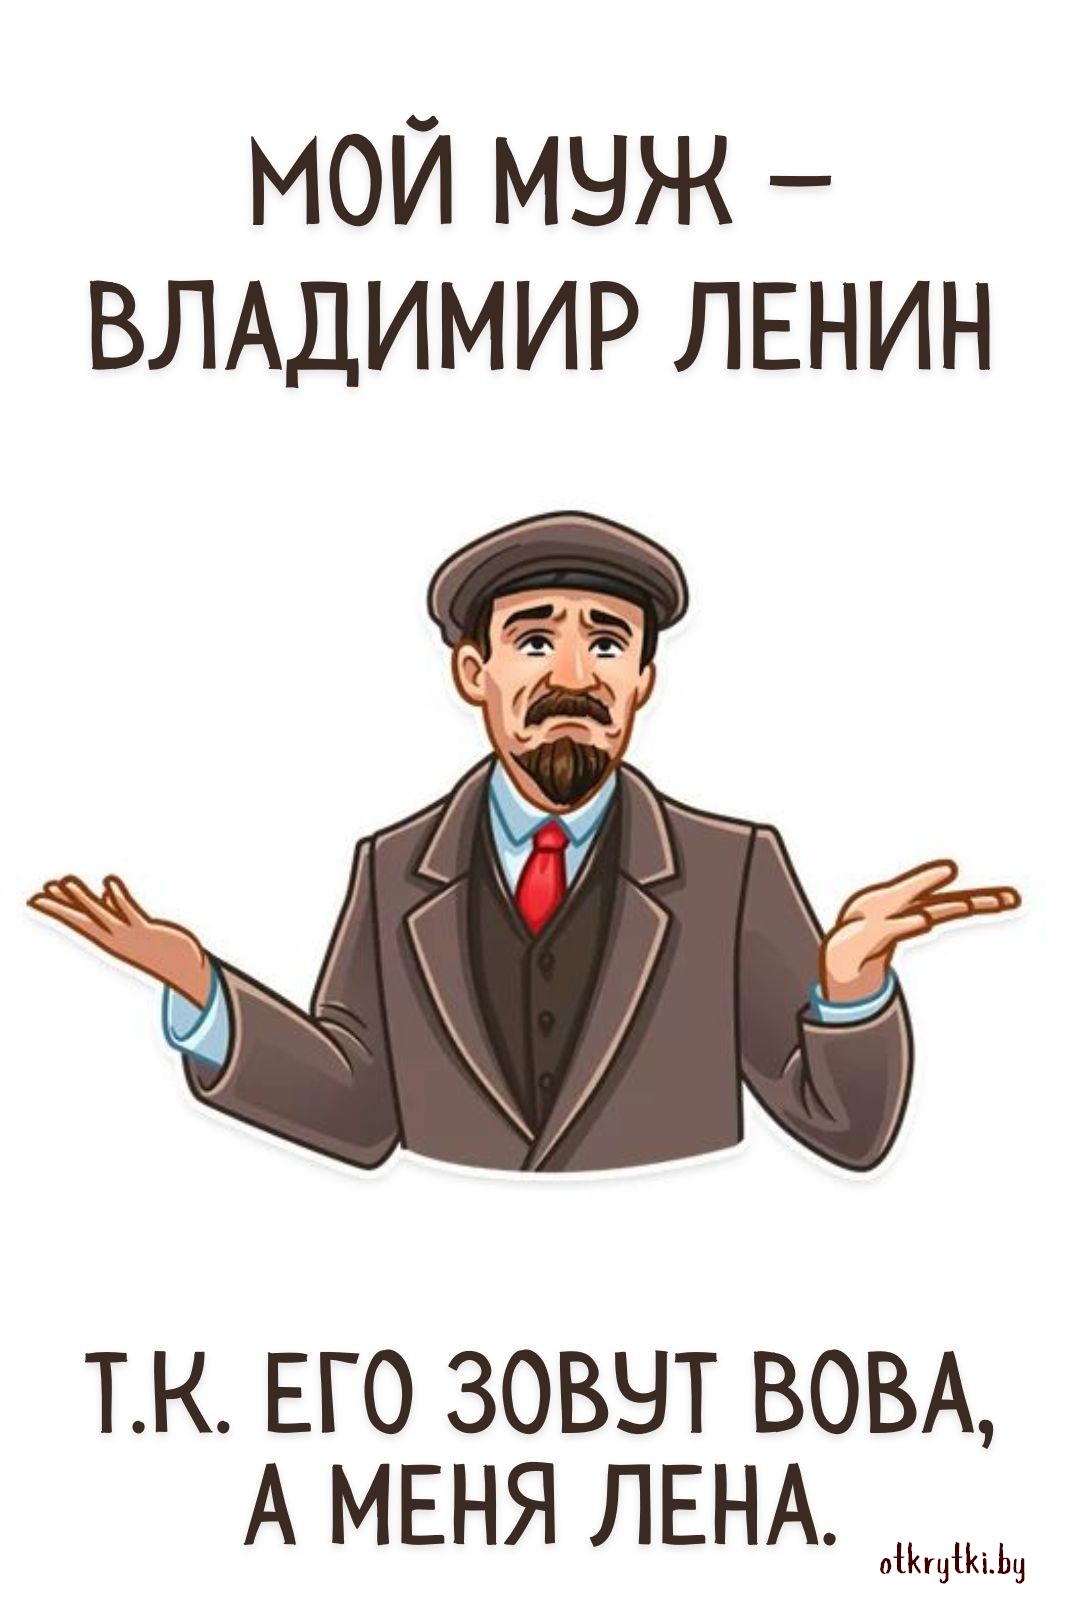 Картинка про Владимира Ленина